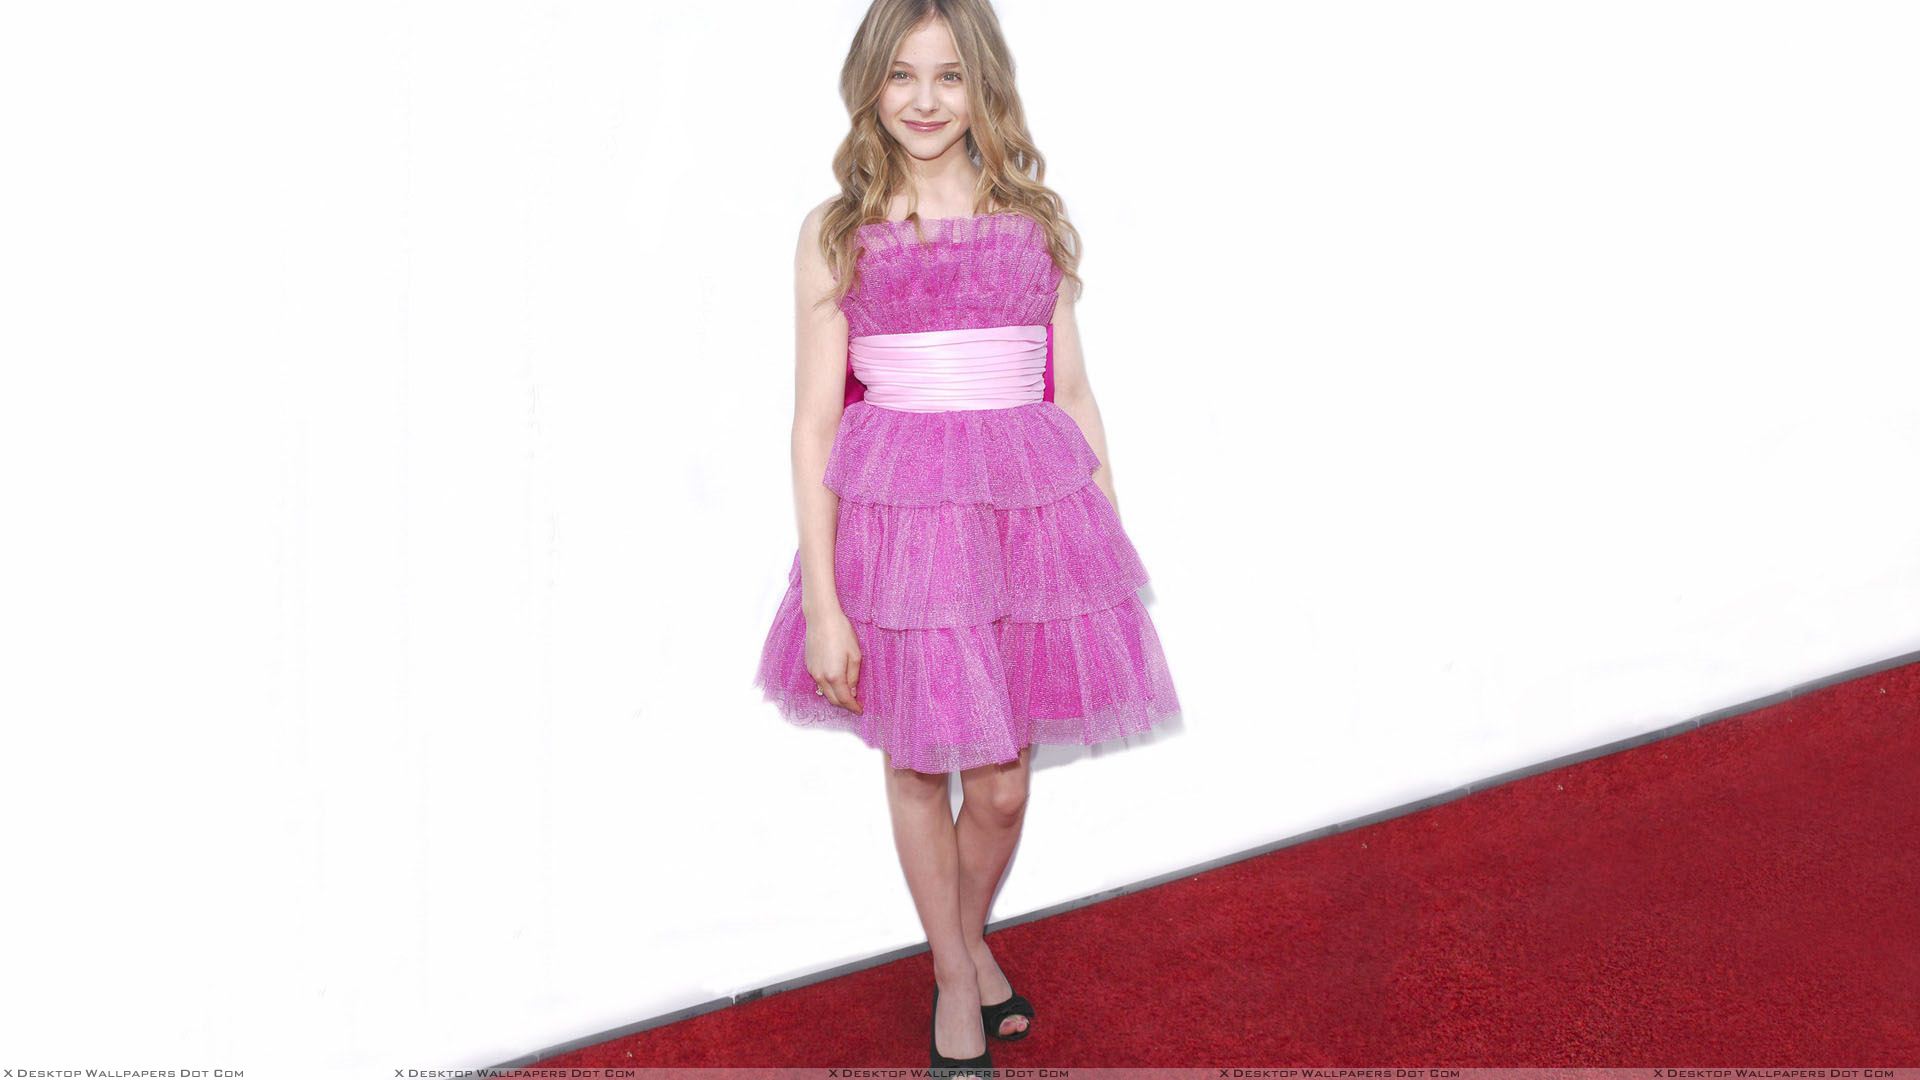 Chloe Grace Moretz Sweet Smiling Pose In Pink Dress Wallpaper